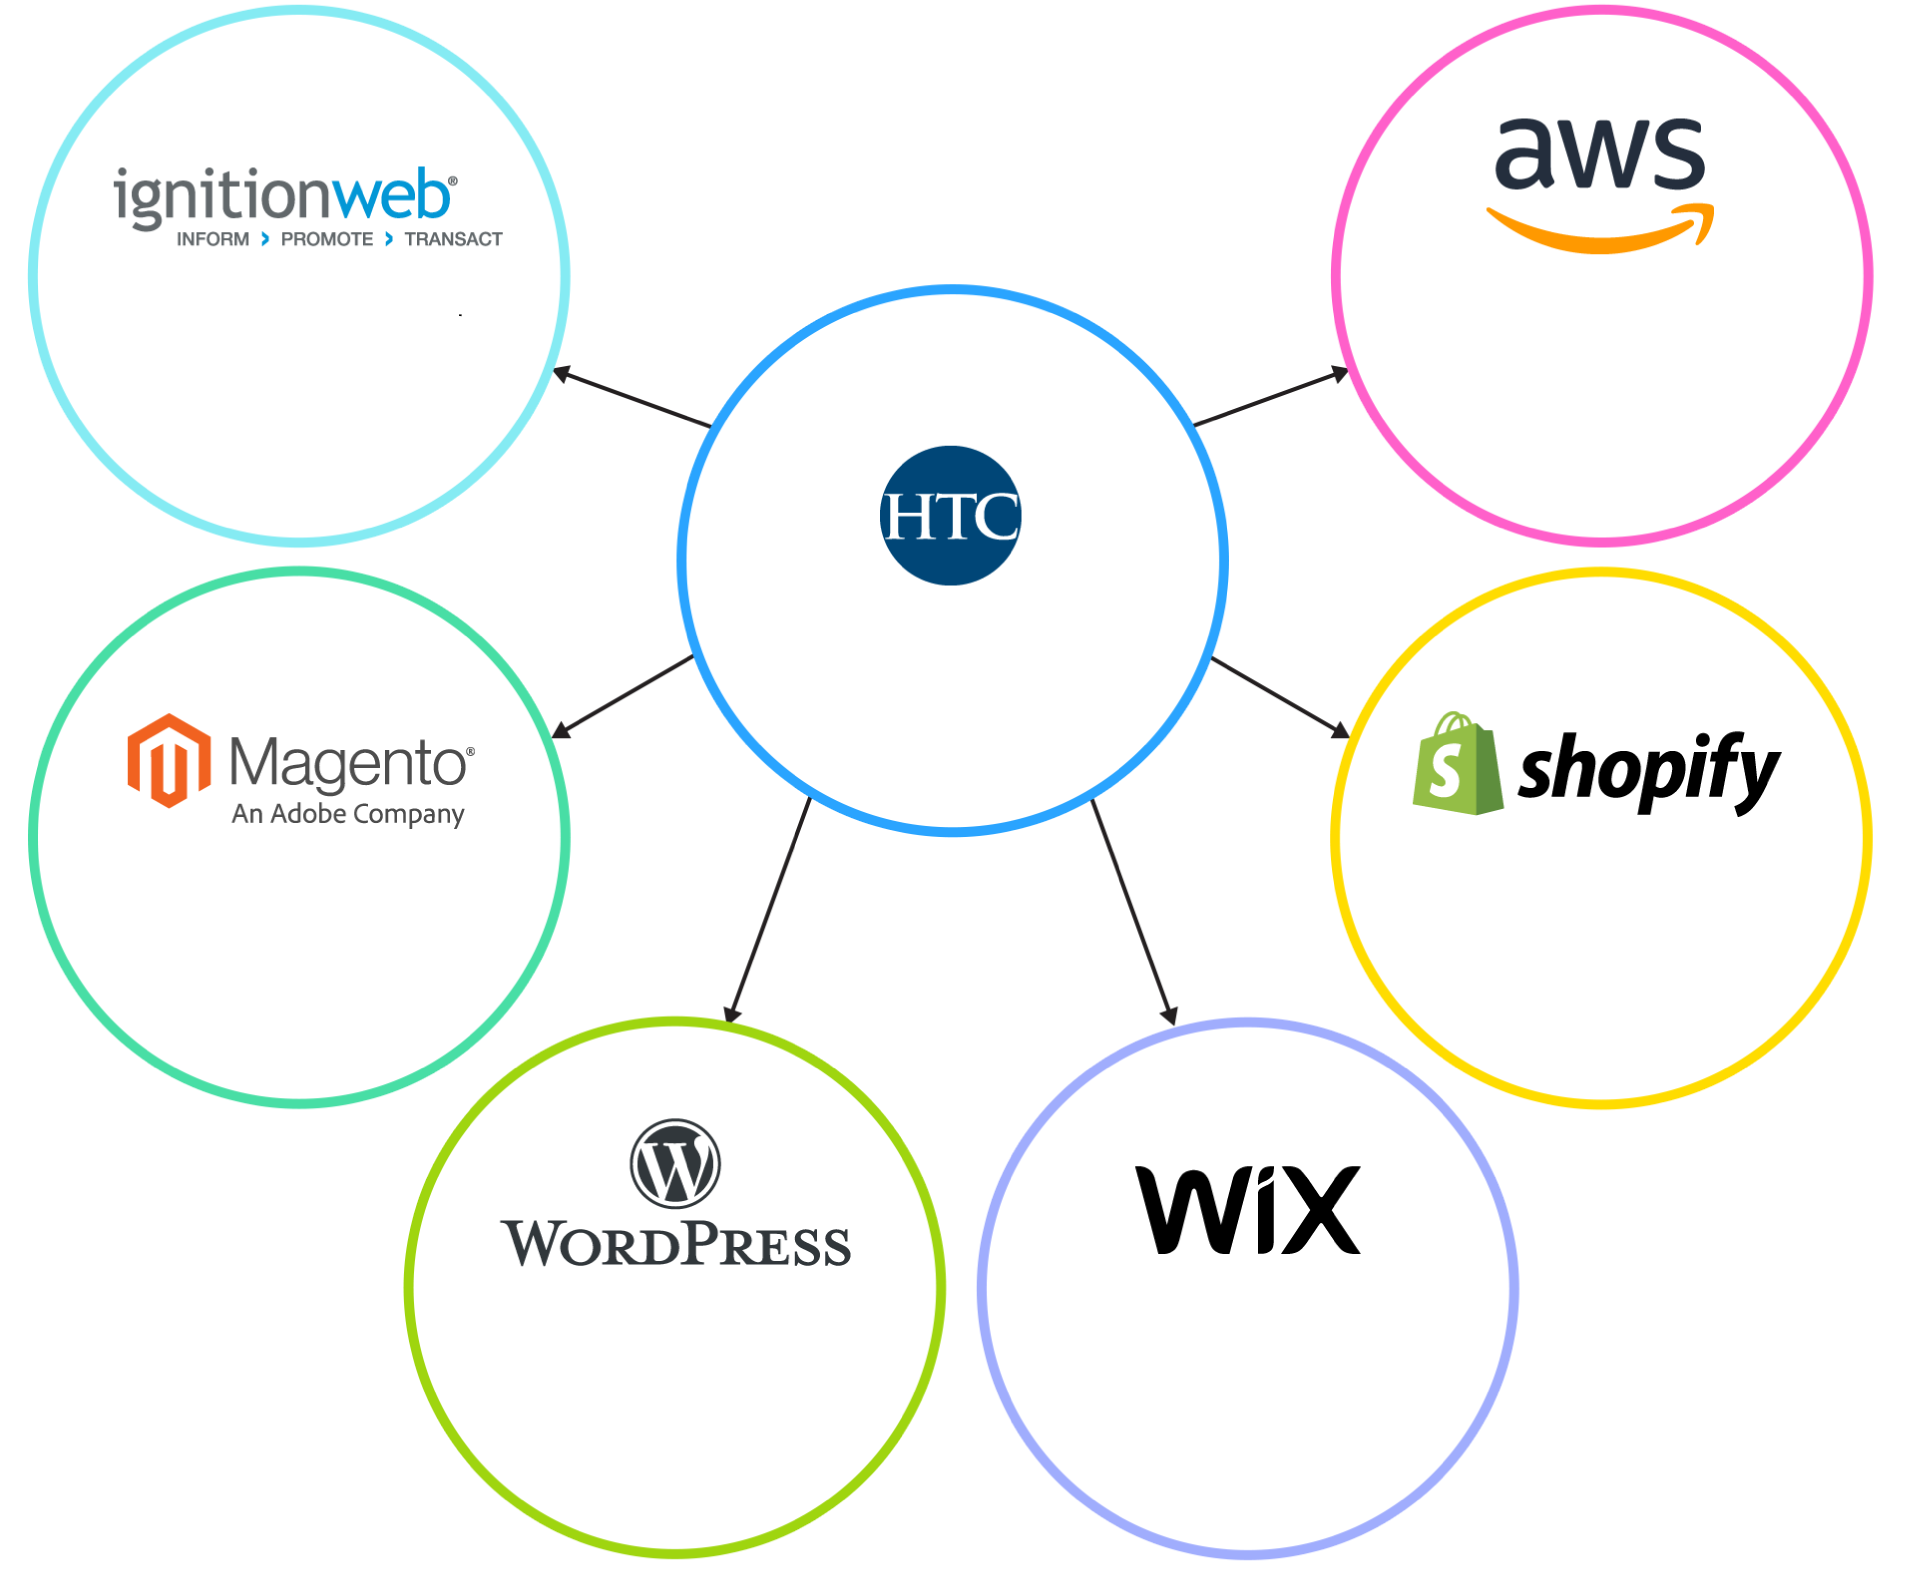 Logo of HTC pointing to the logos of IgnitionWeb, Magento, WordPress, Wix, Shopify, AWS